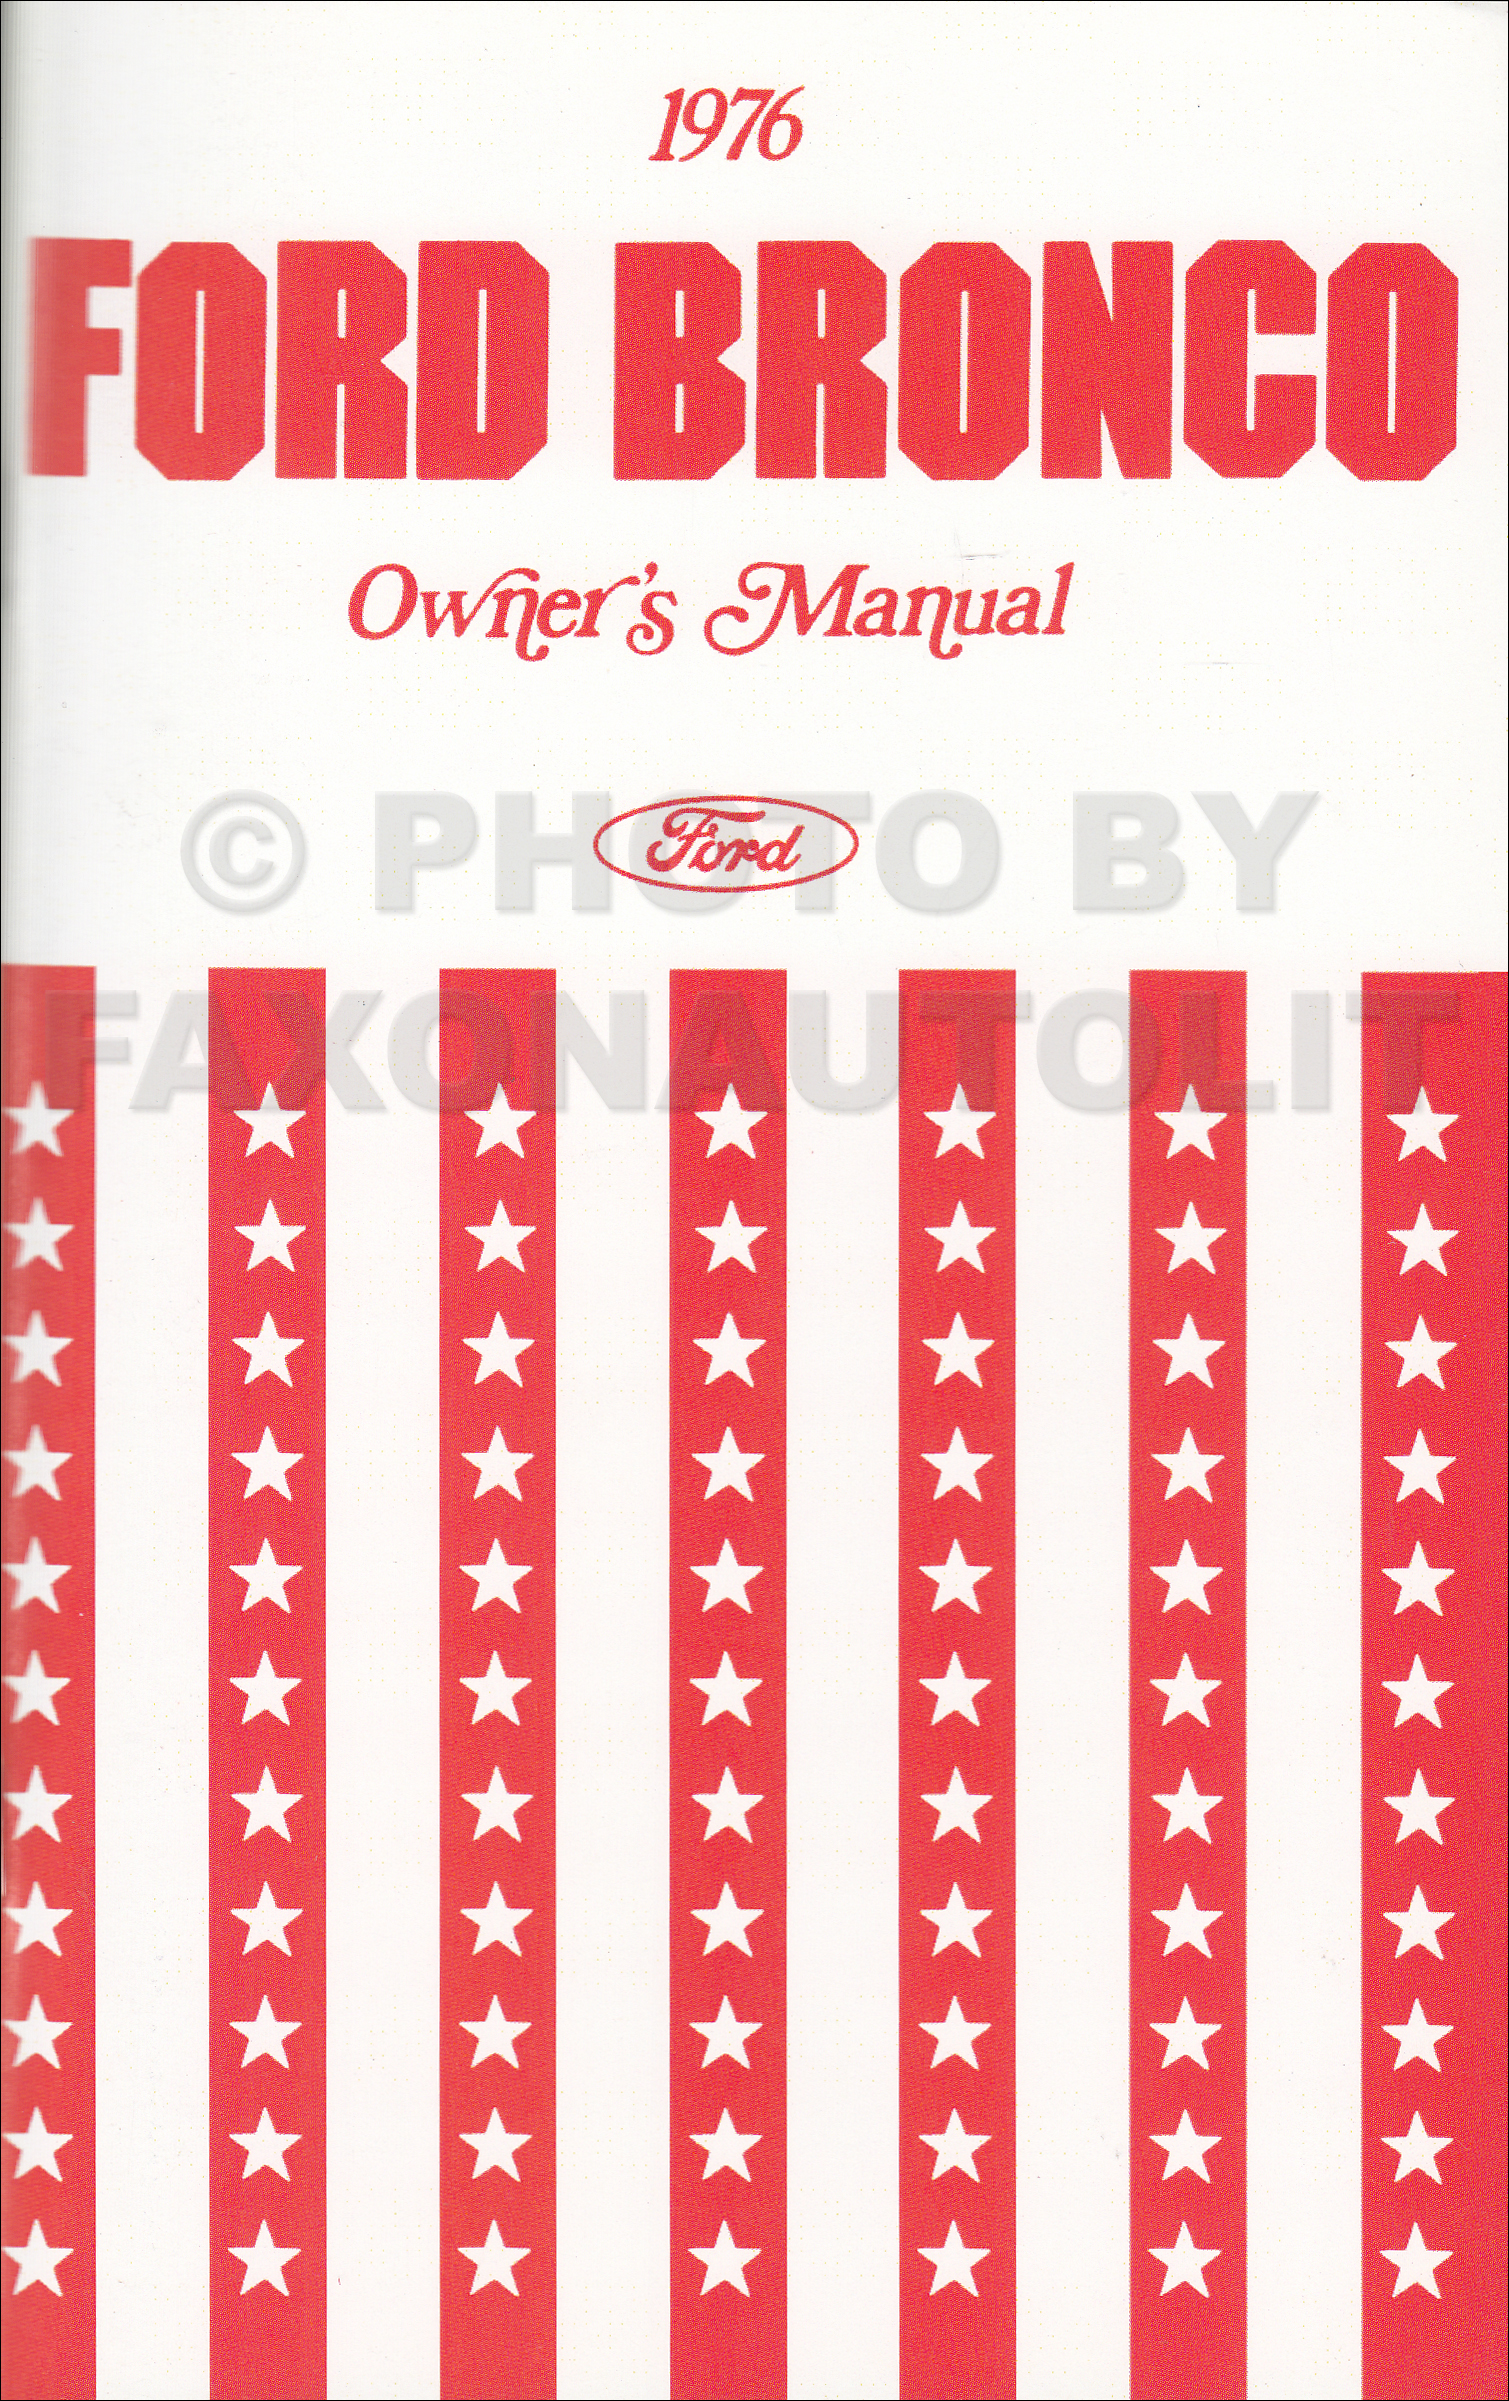 1976 Ford Bronco Owner's Manual Reprint